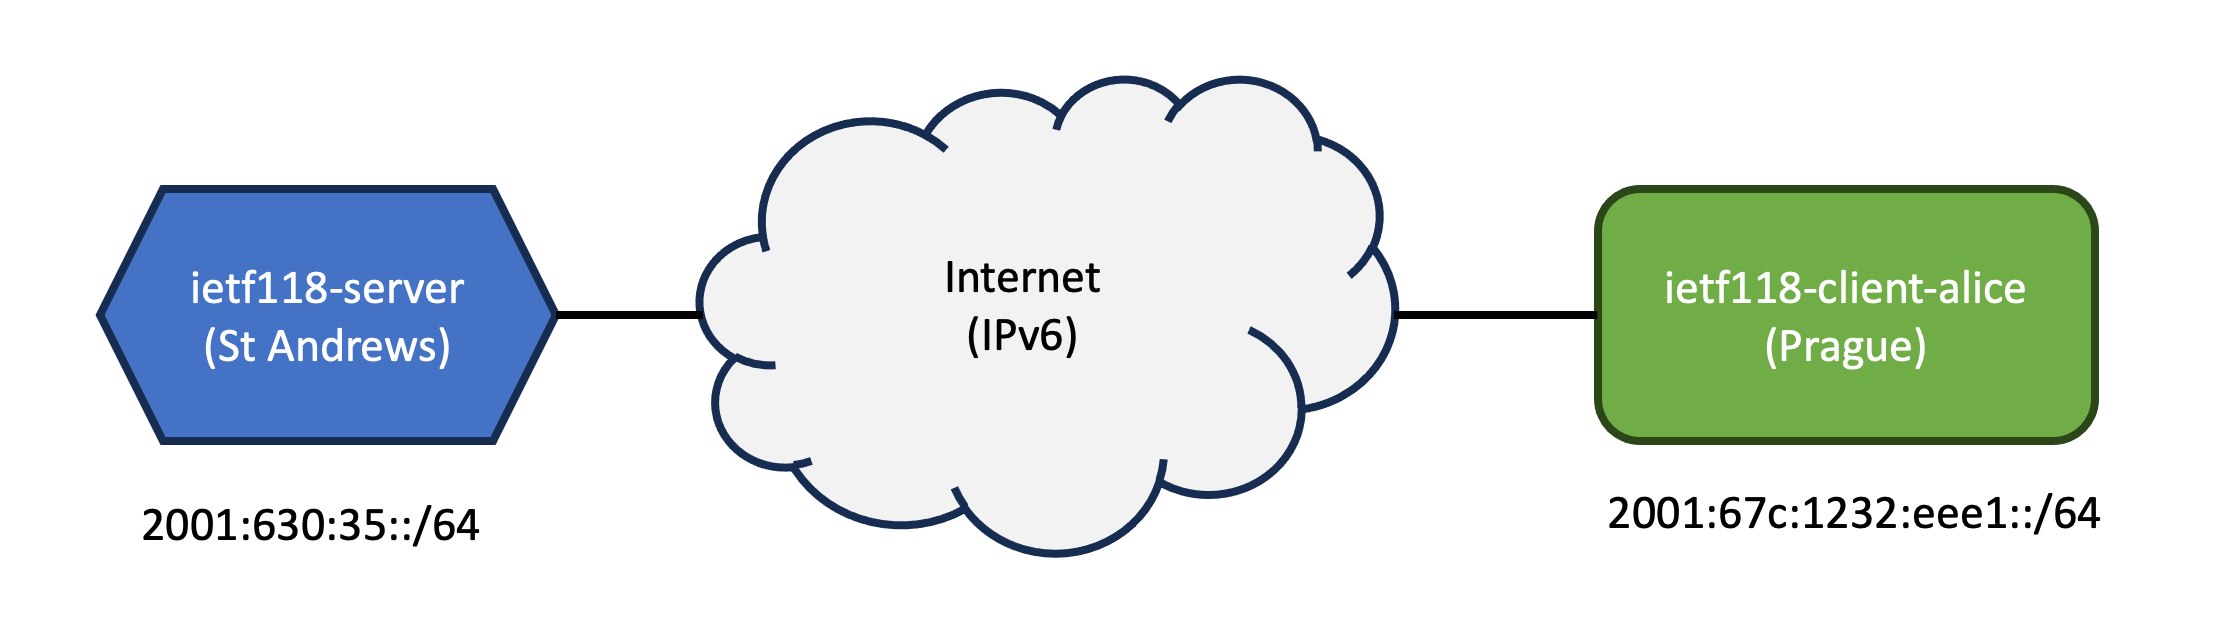 IETF118 demo schematic diagram